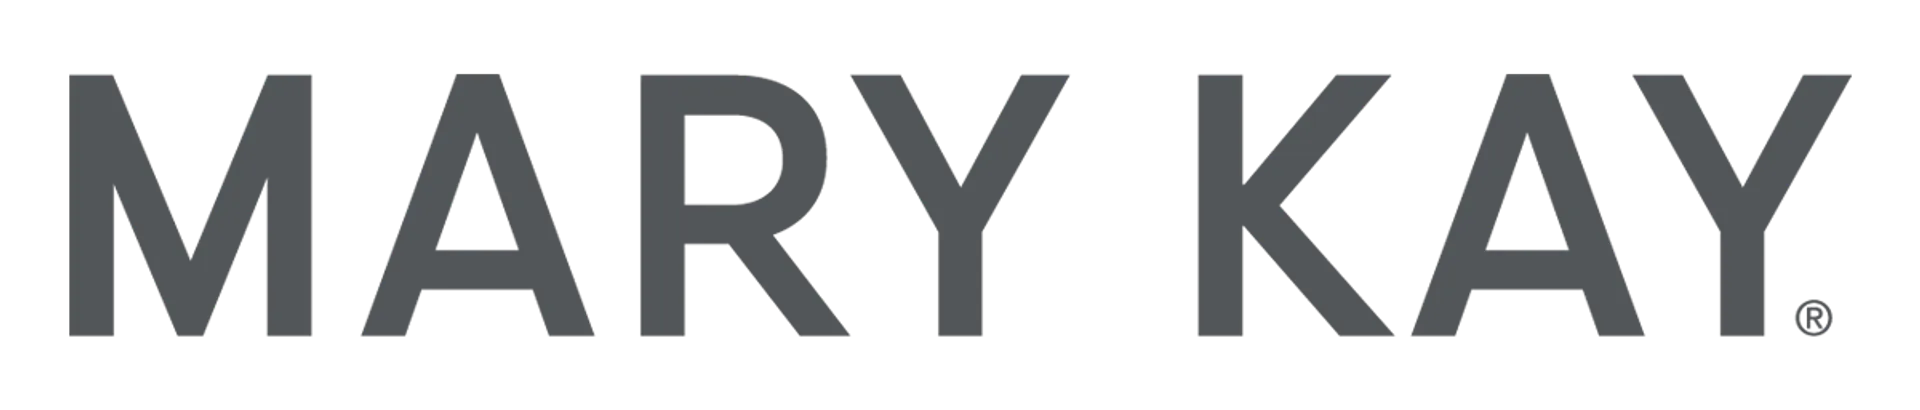 MARY KAY logo de catálogo